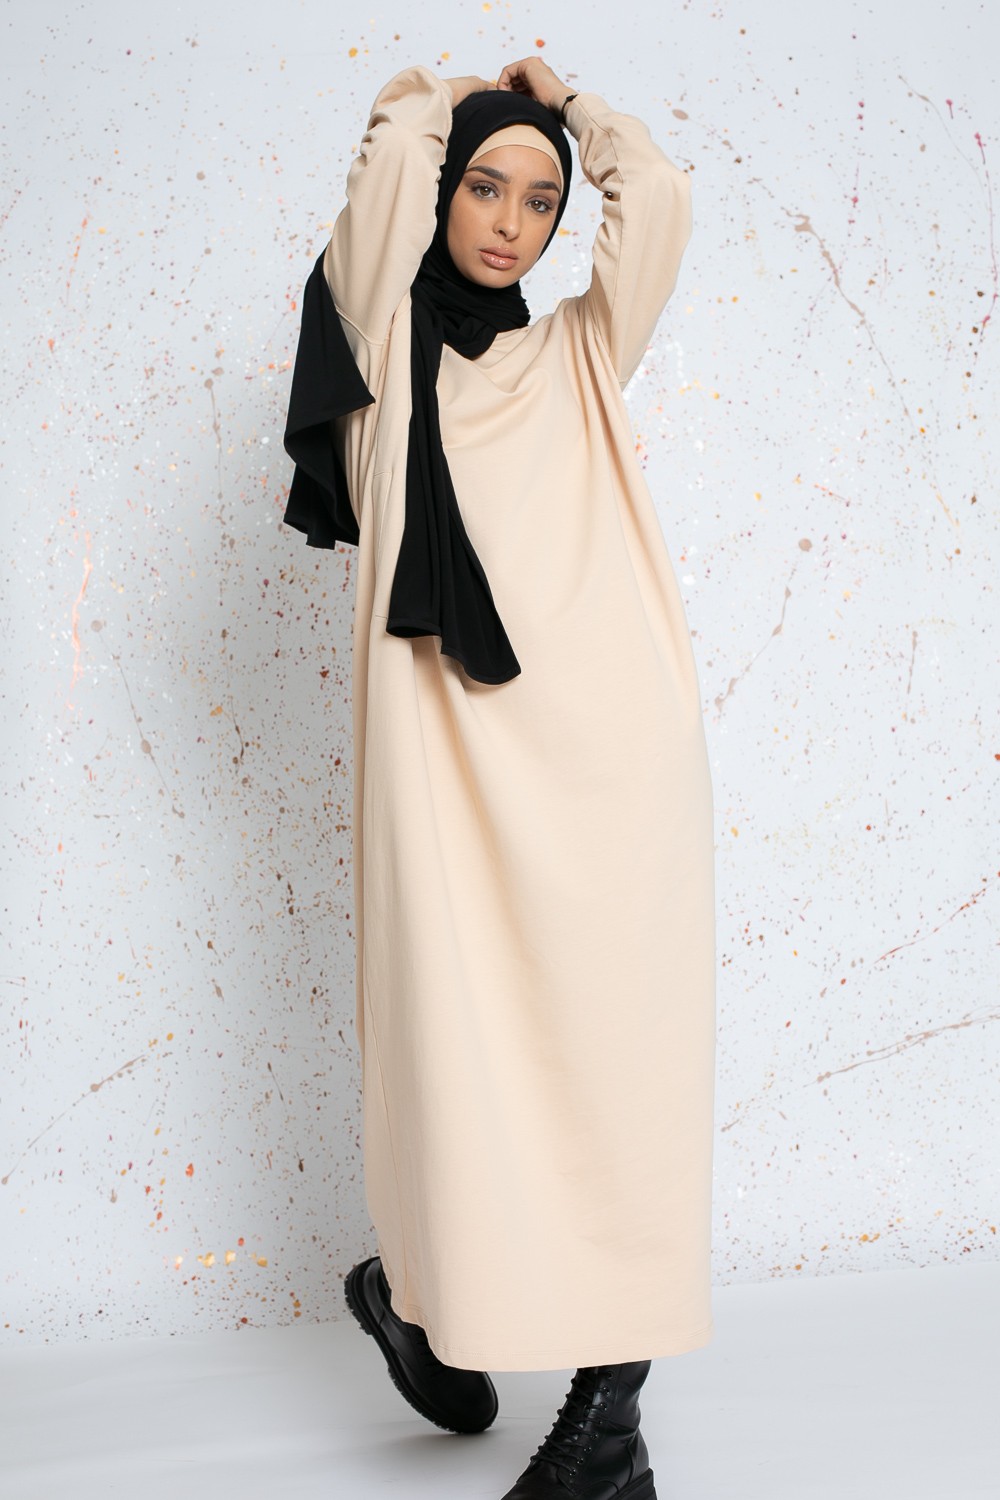 Robe sweat oversize pour fille musulmane moderne